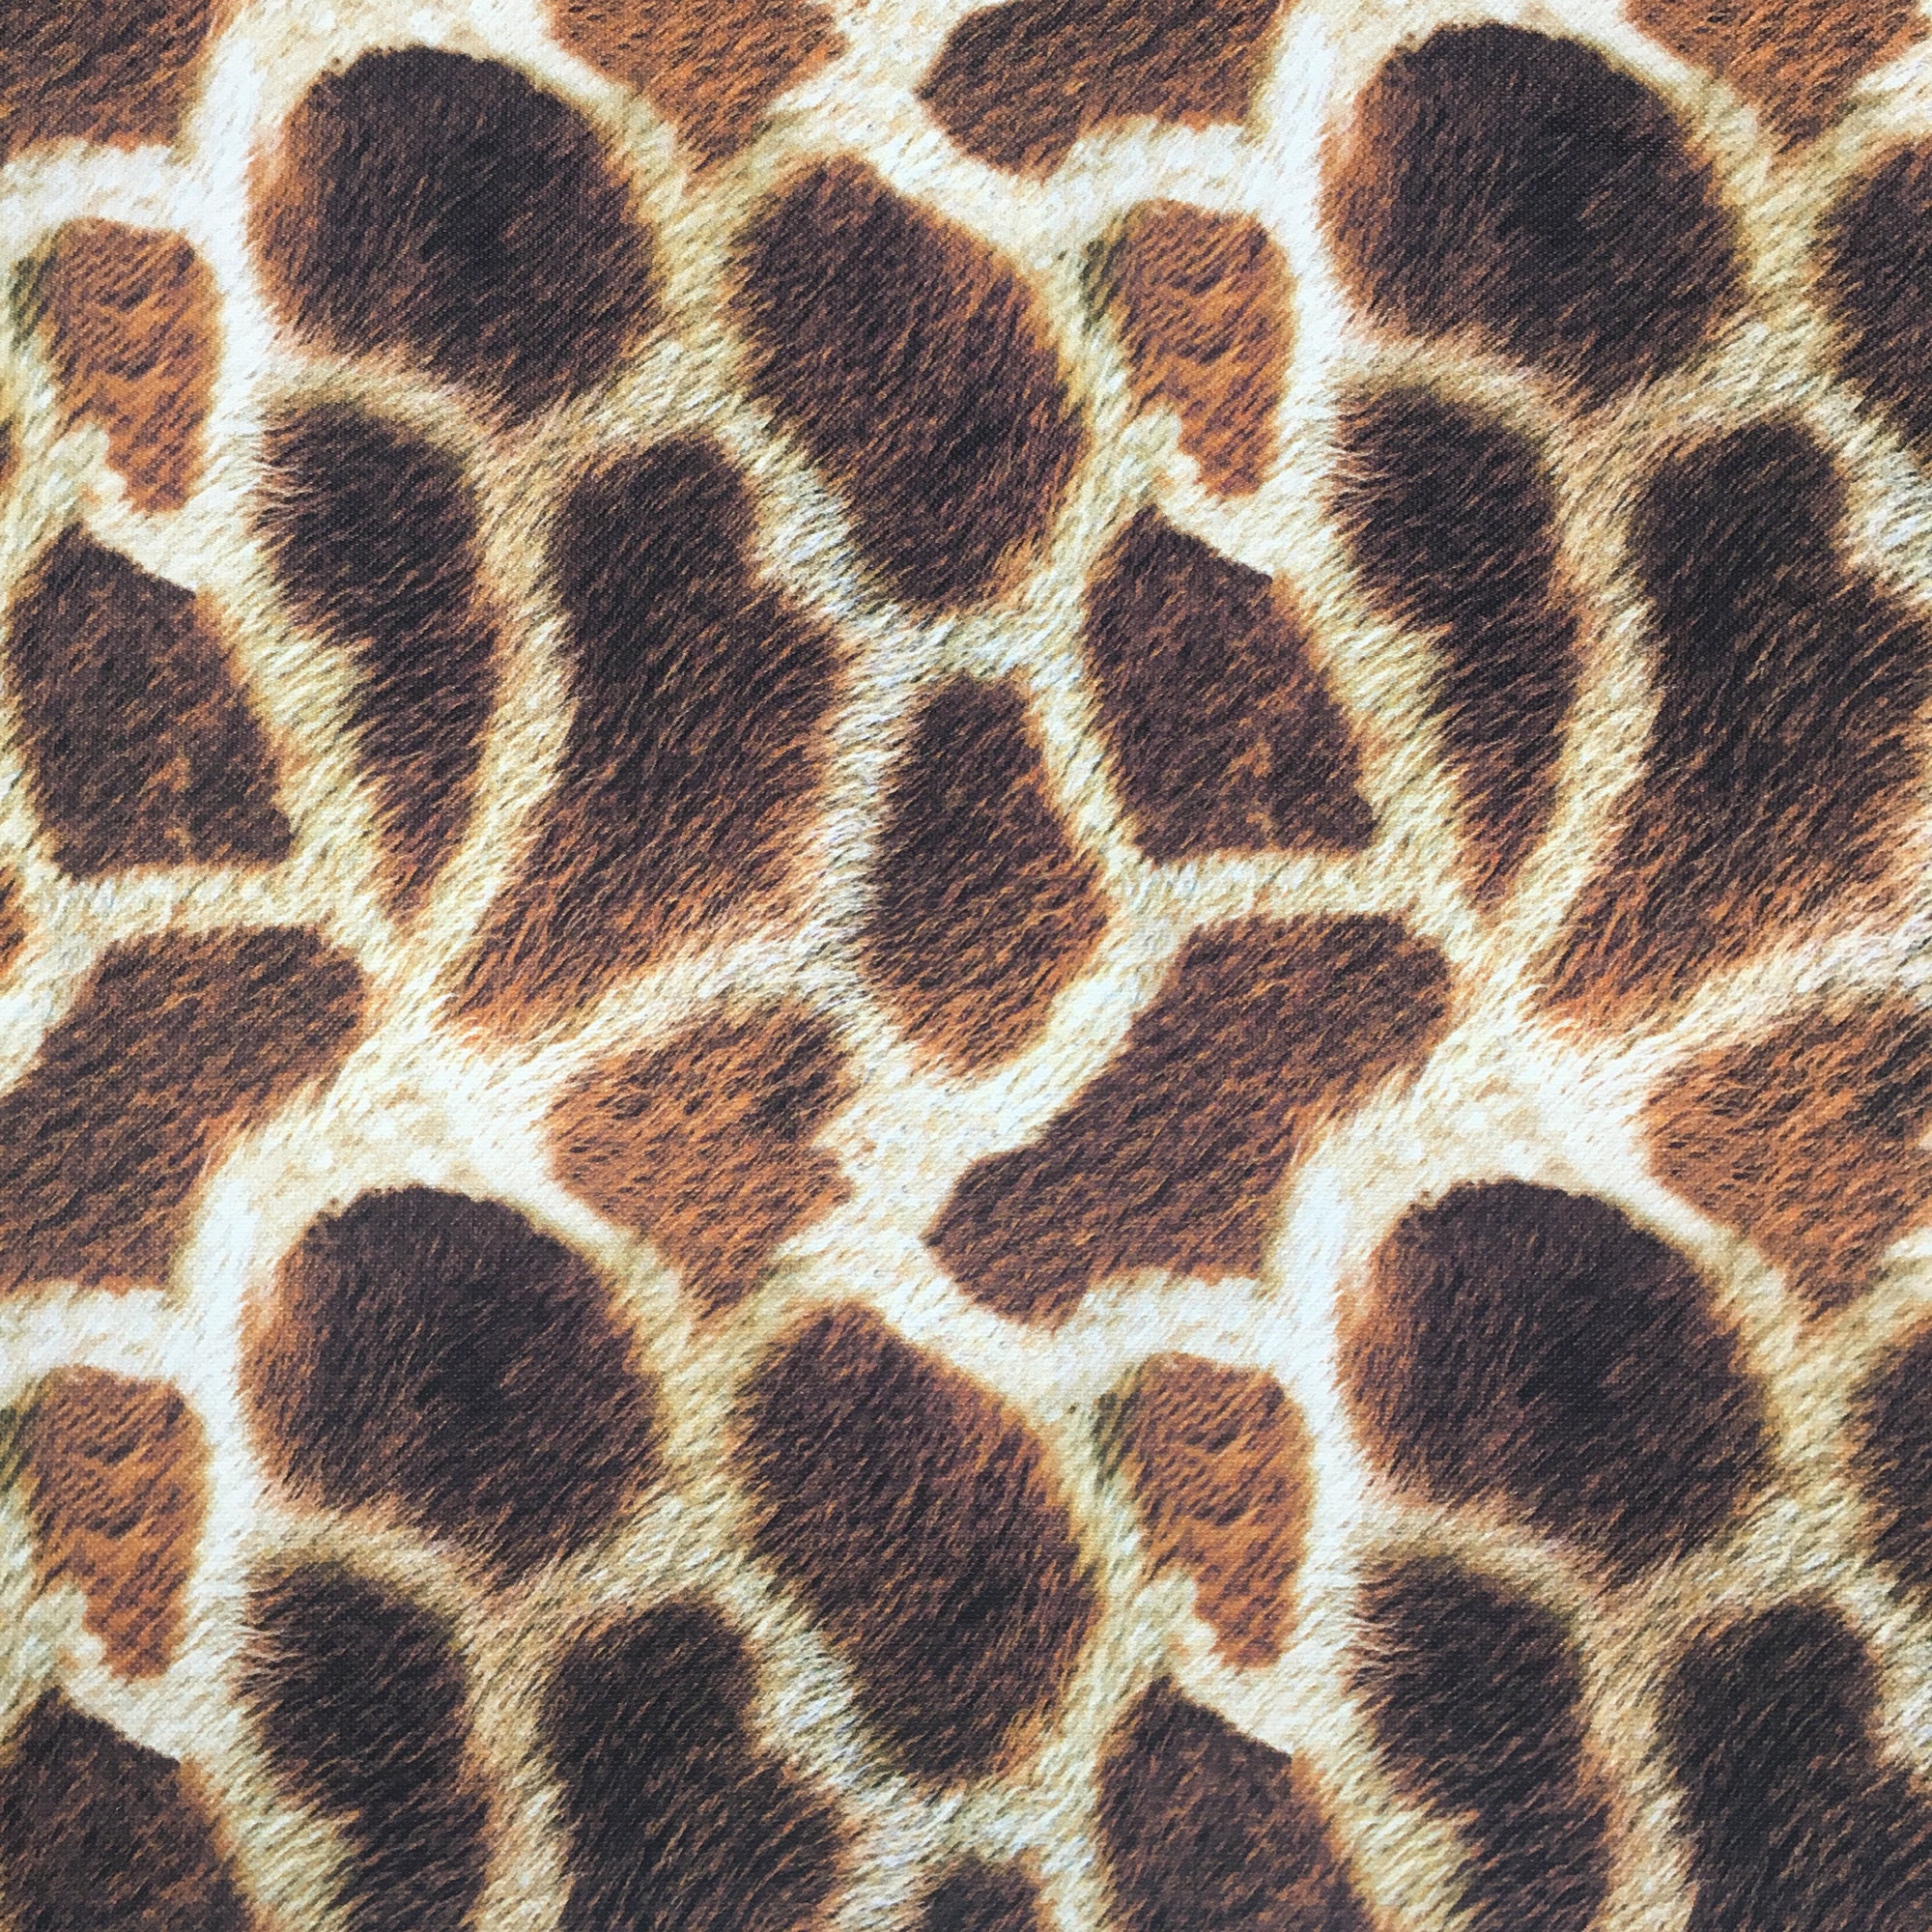 Giraffe satin fabric Giraffe fabric Animal fabric. Stretch satin fabric Pink and brown fabric satin stretch Camelopard fabric